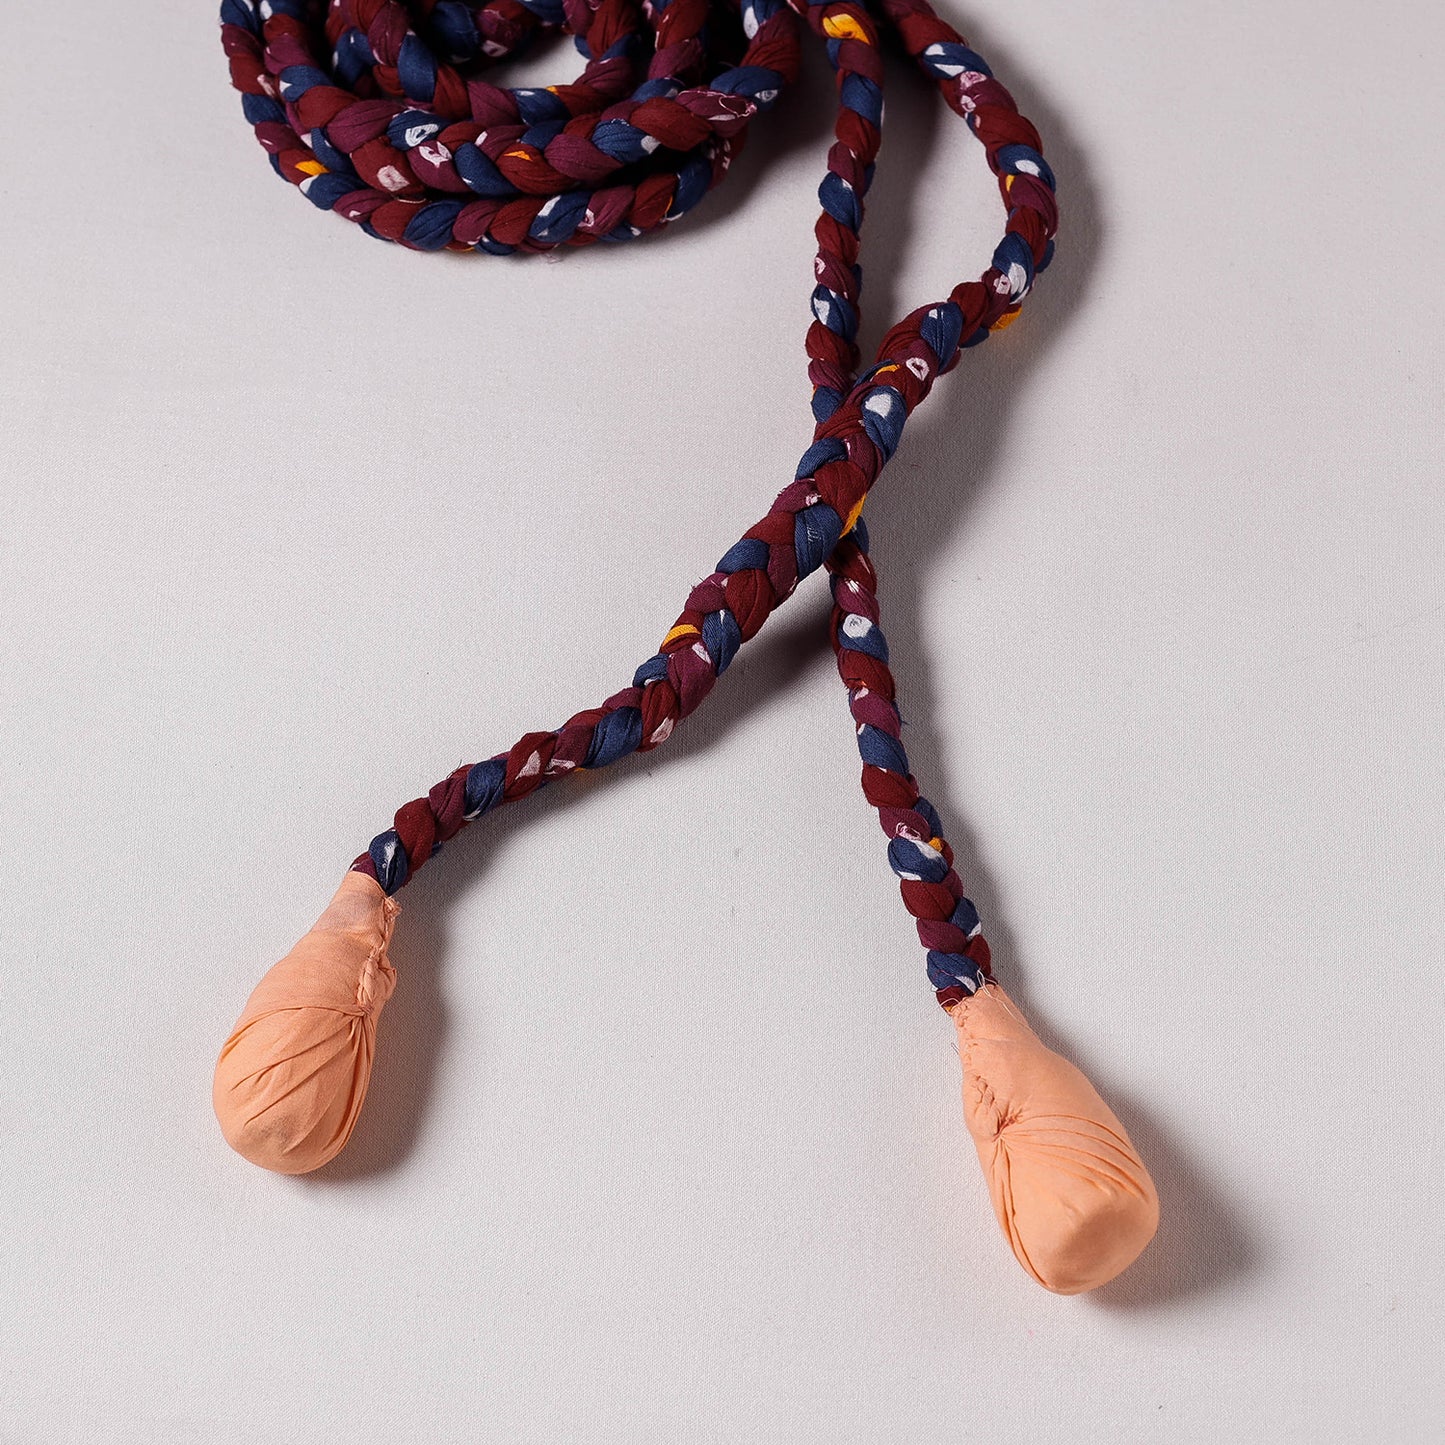 Handmade Upcycled Fabric Skipping Rope